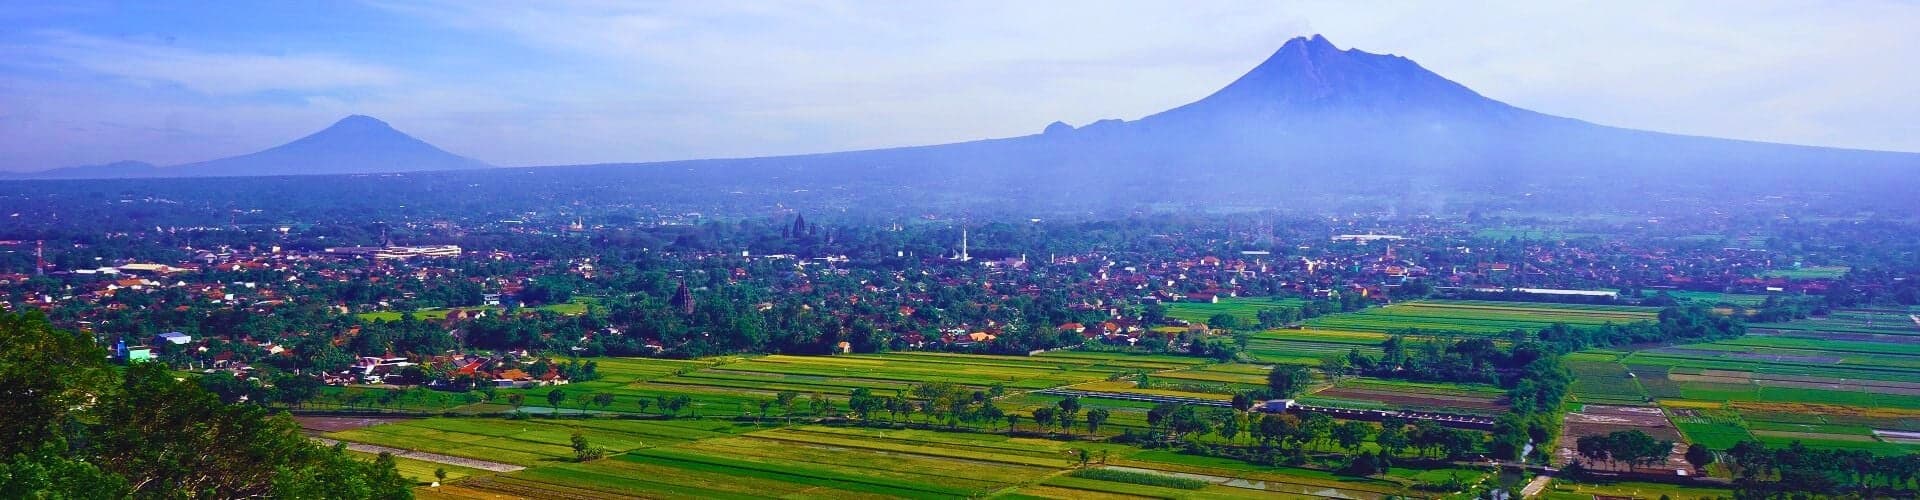 Yogyakarta Skyline